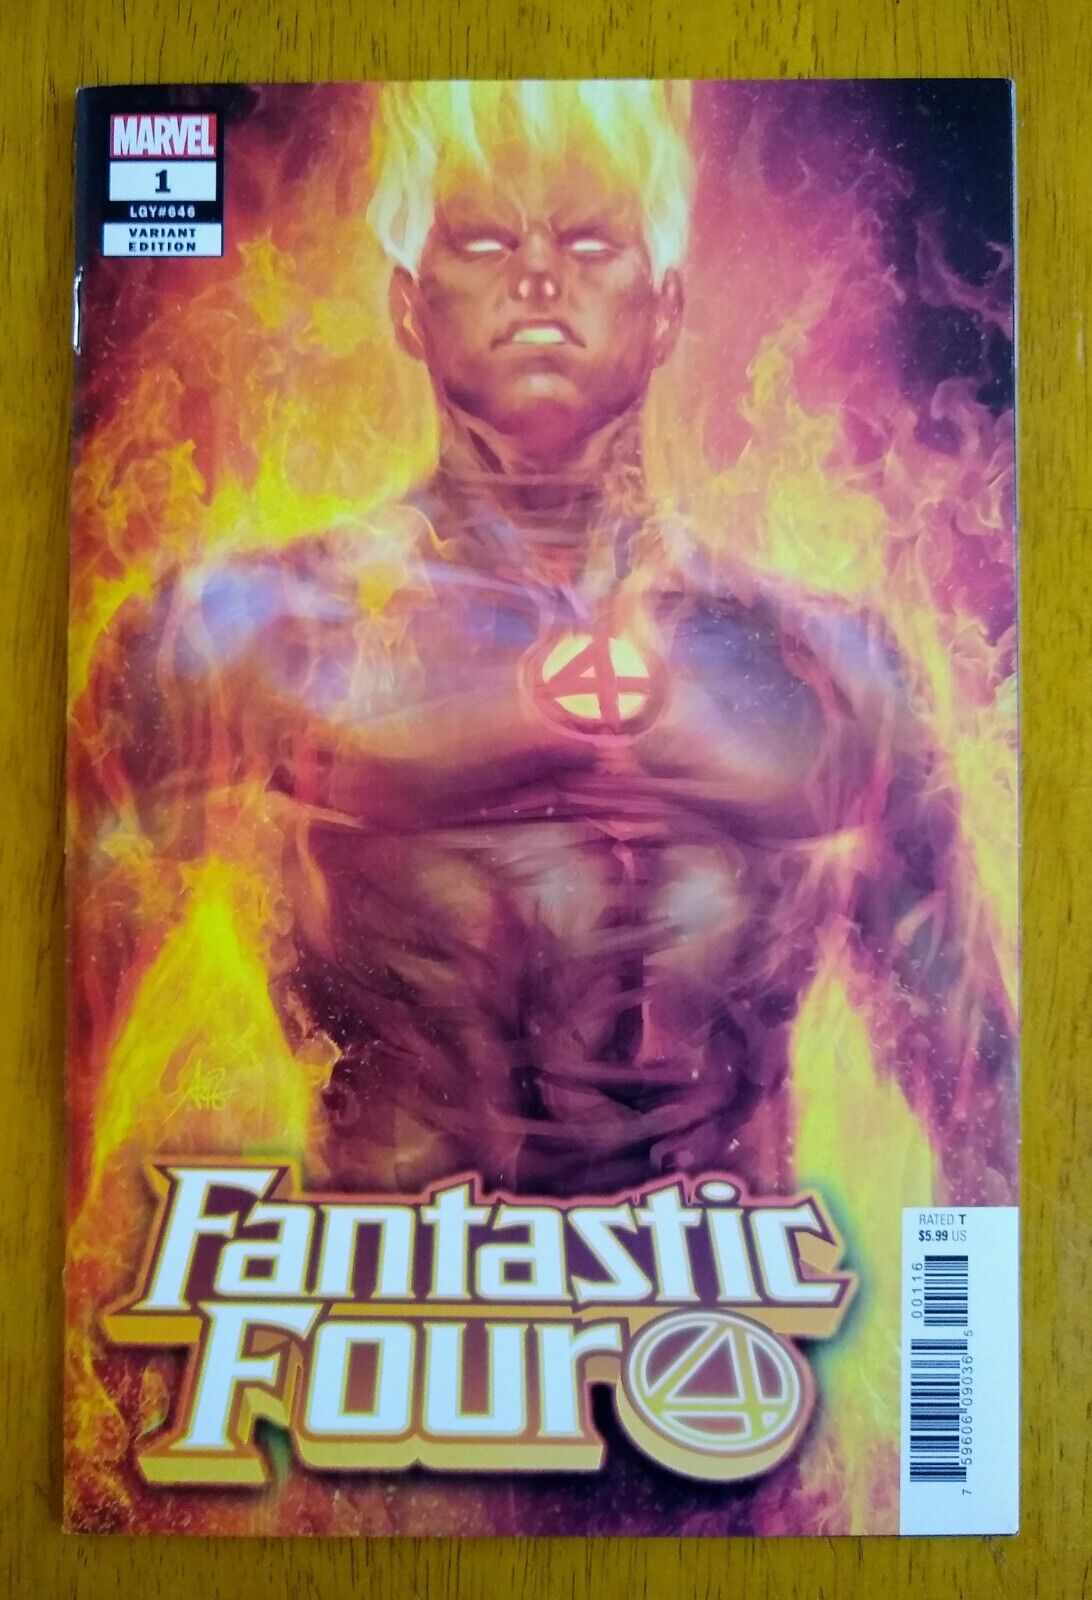 Fantastic Four #1 The Human Torch Marvel MCU Comic Book Issue 2018 Artgerm